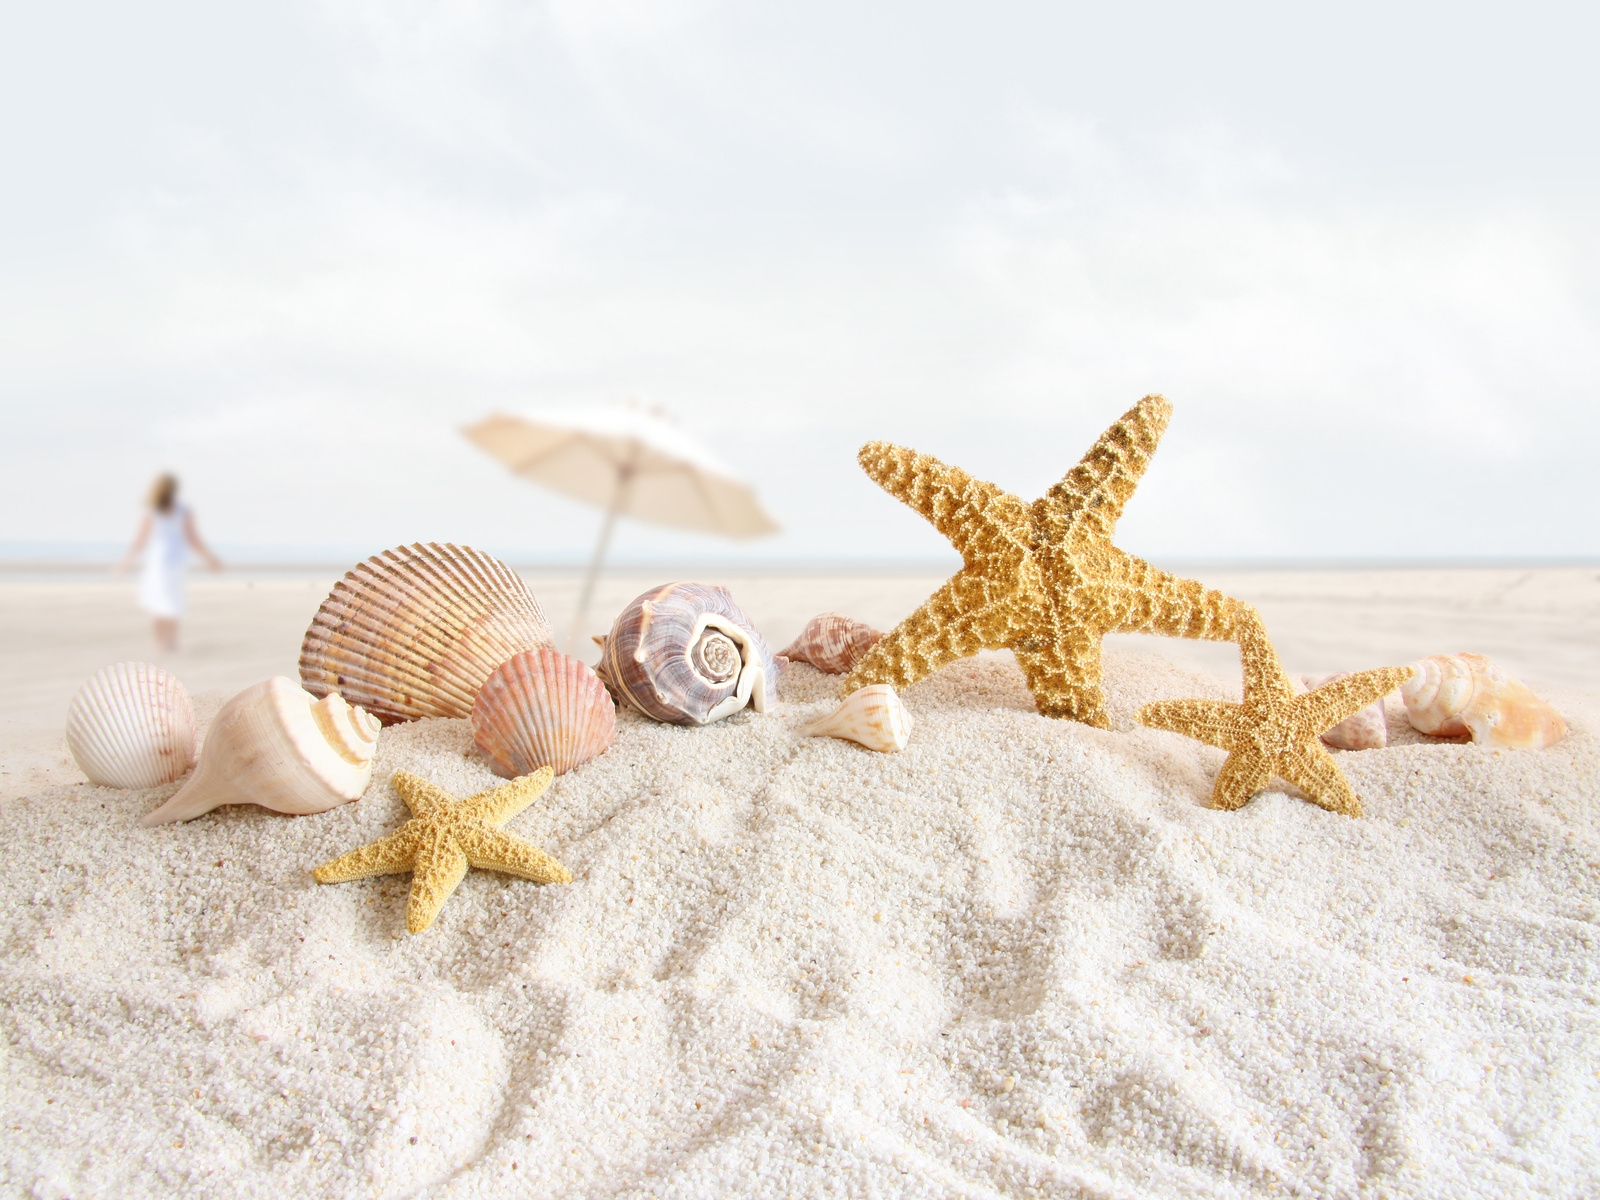 Seashells and Starfish for 1600 x 1200 resolution